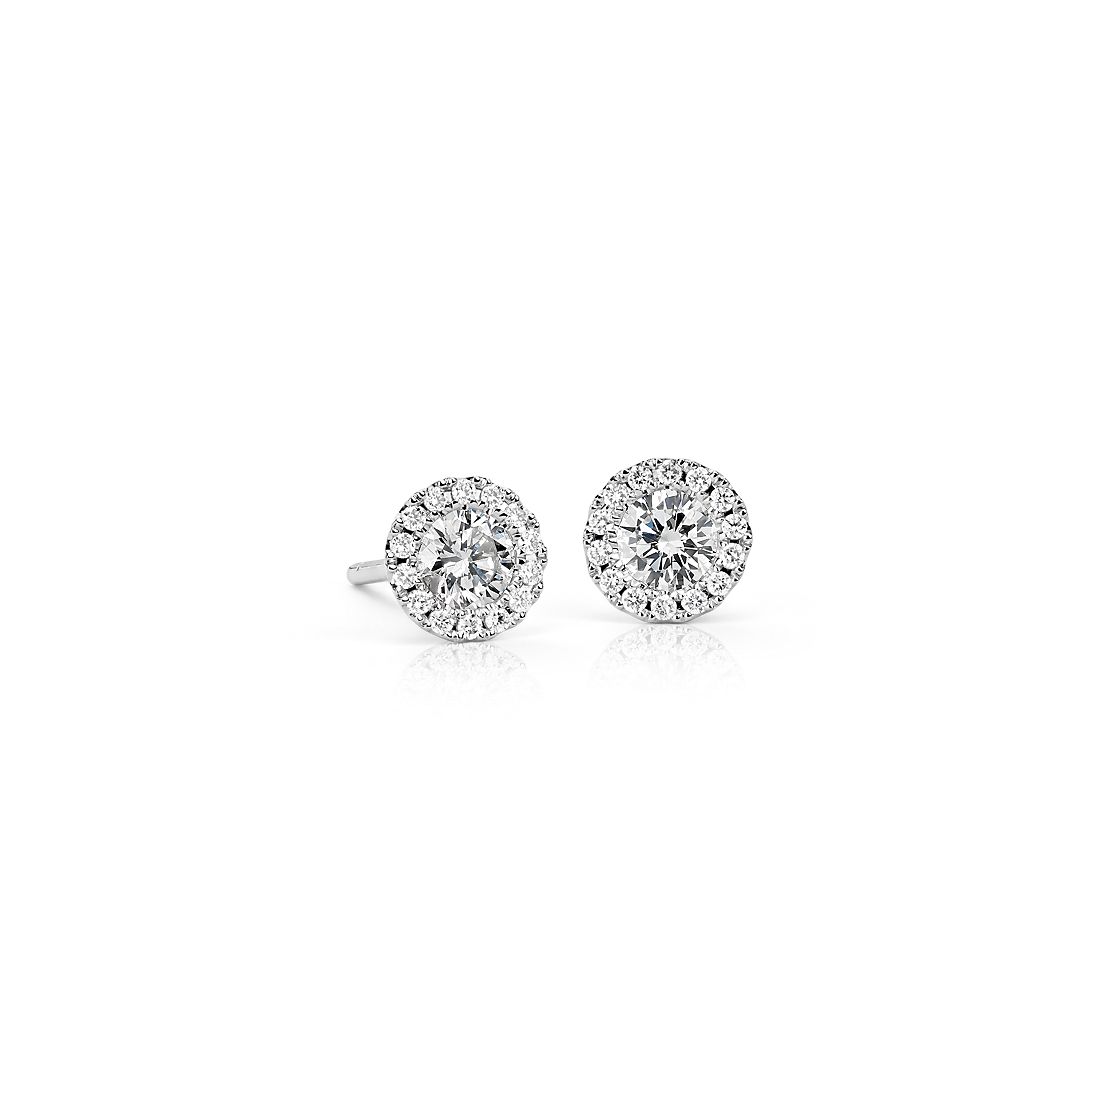 Martini Halo Diamond Stud Earrings in 14k White Gold (1/2 ct. tw.)